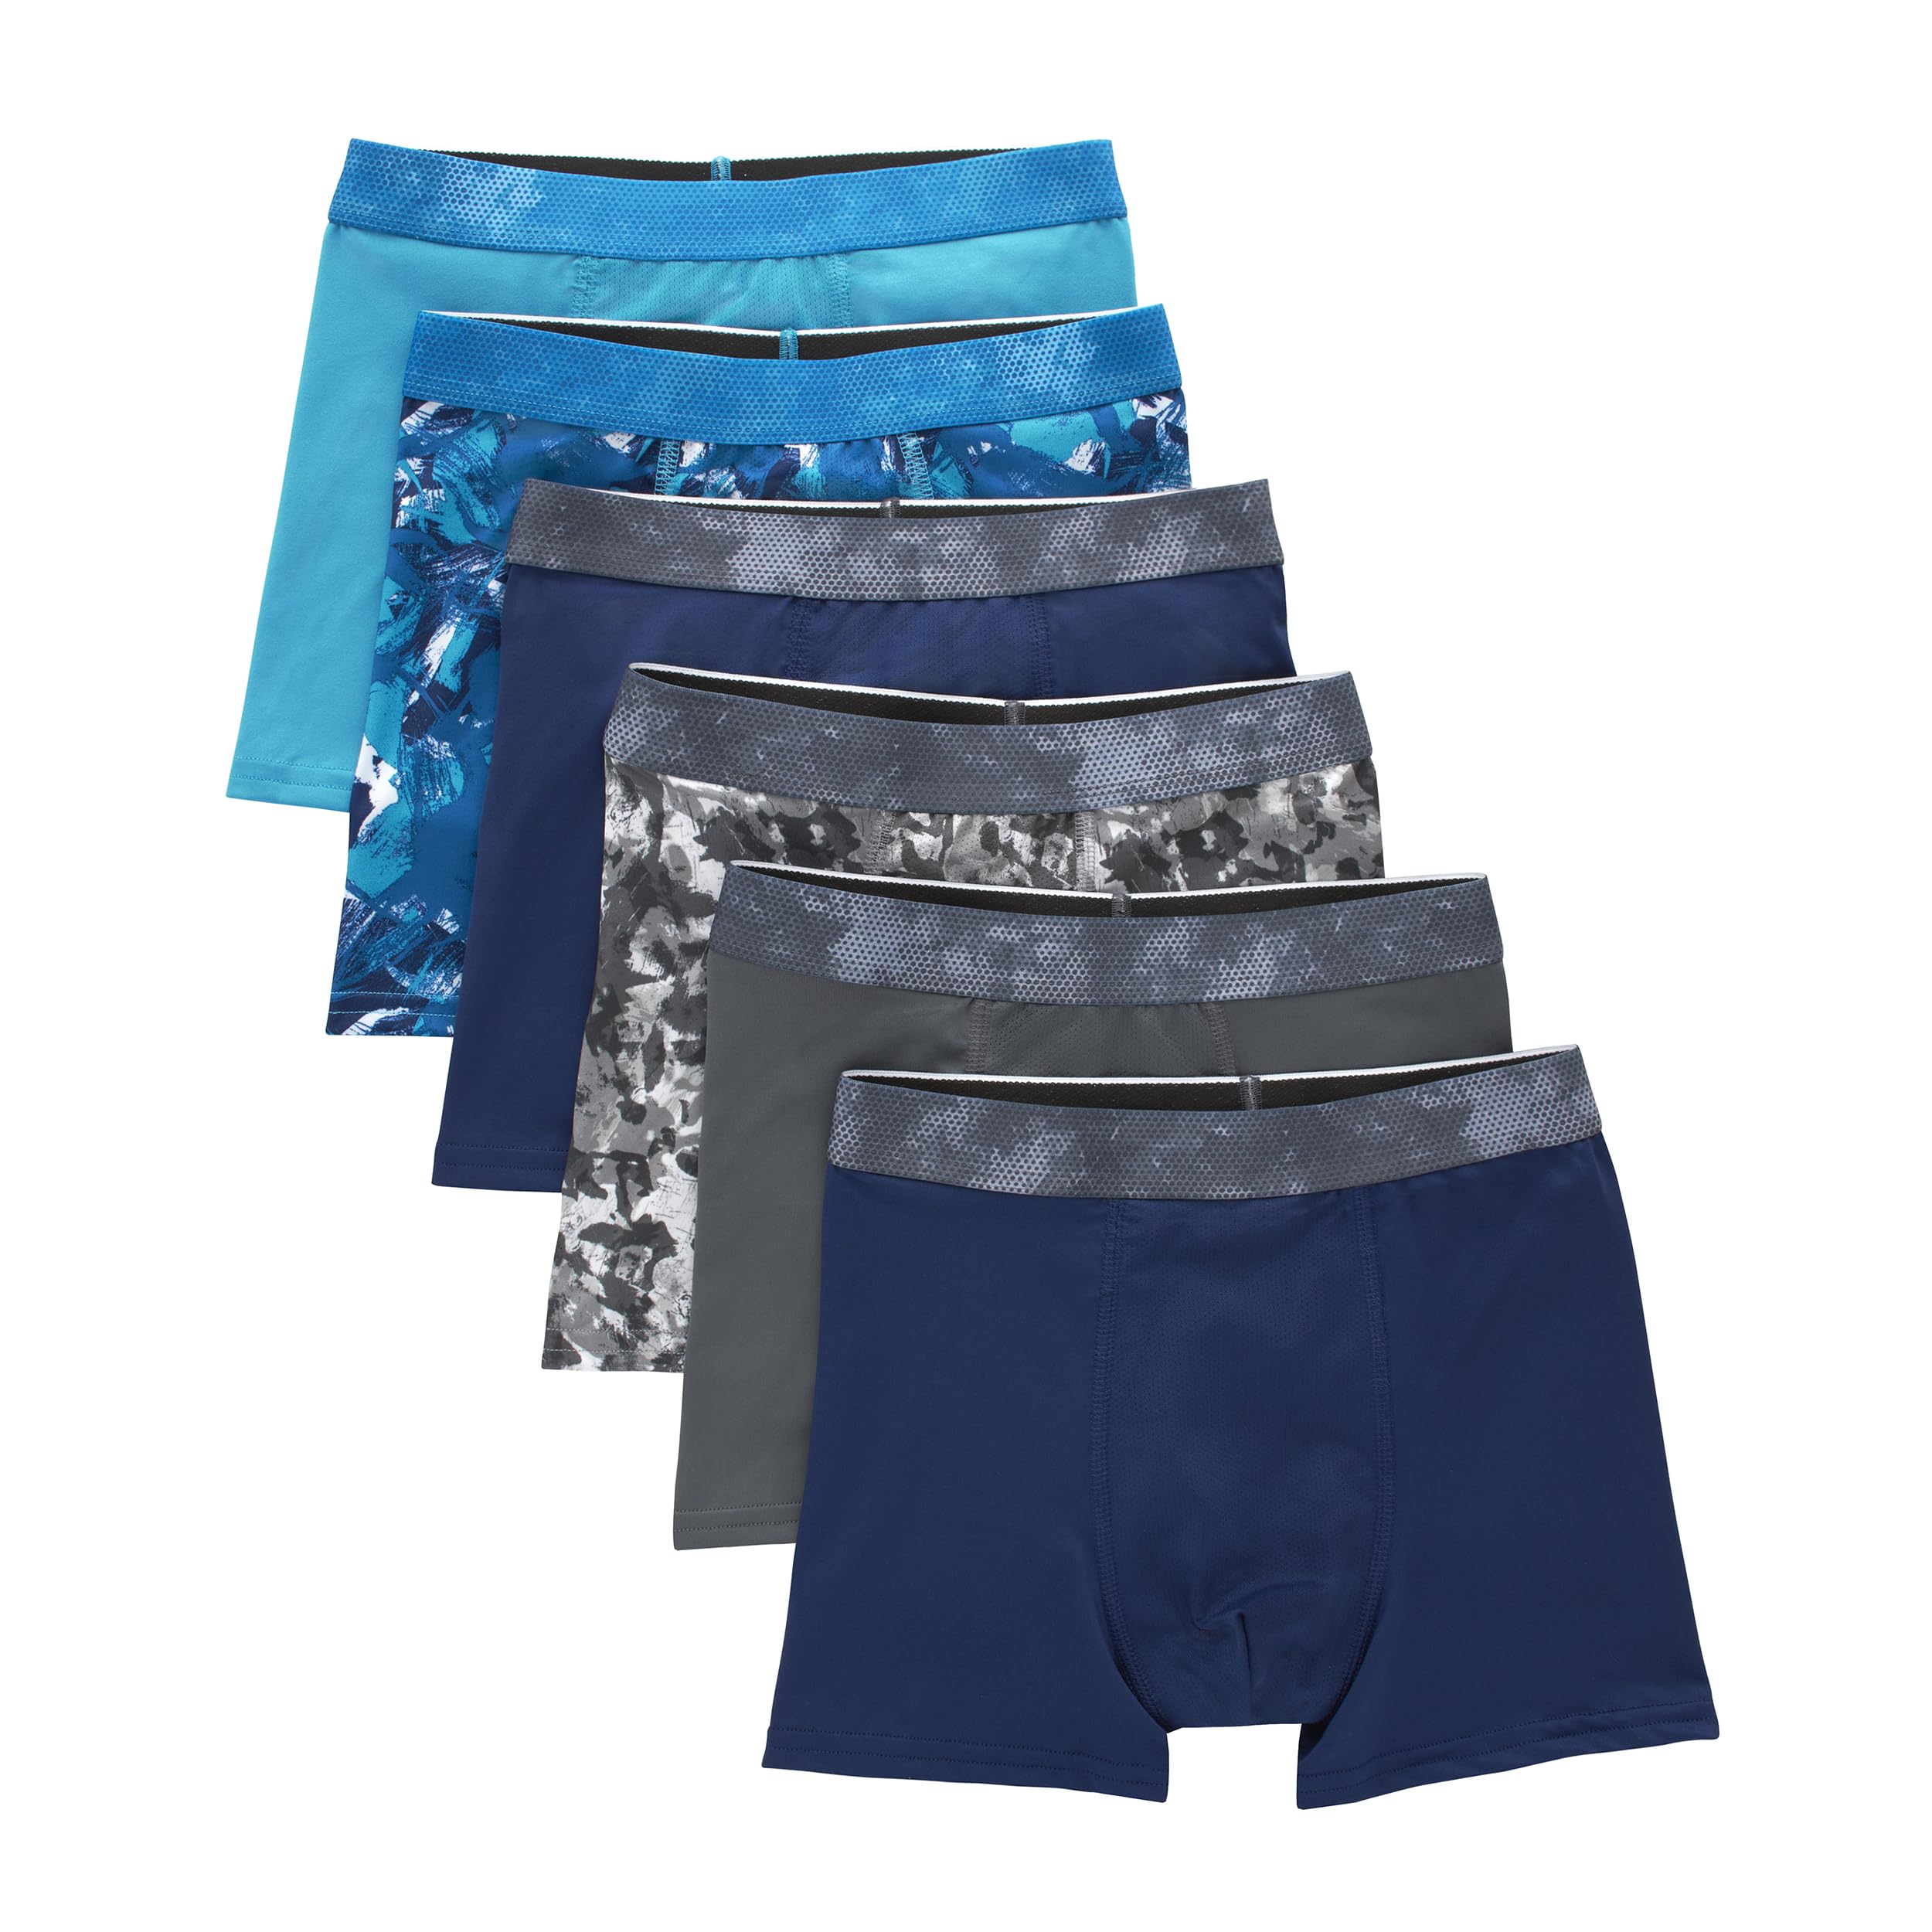 Hanes Boys' Big Performance Tween Boxer Briefs Underwear, Assorted Prints & Solids, 6-Pack